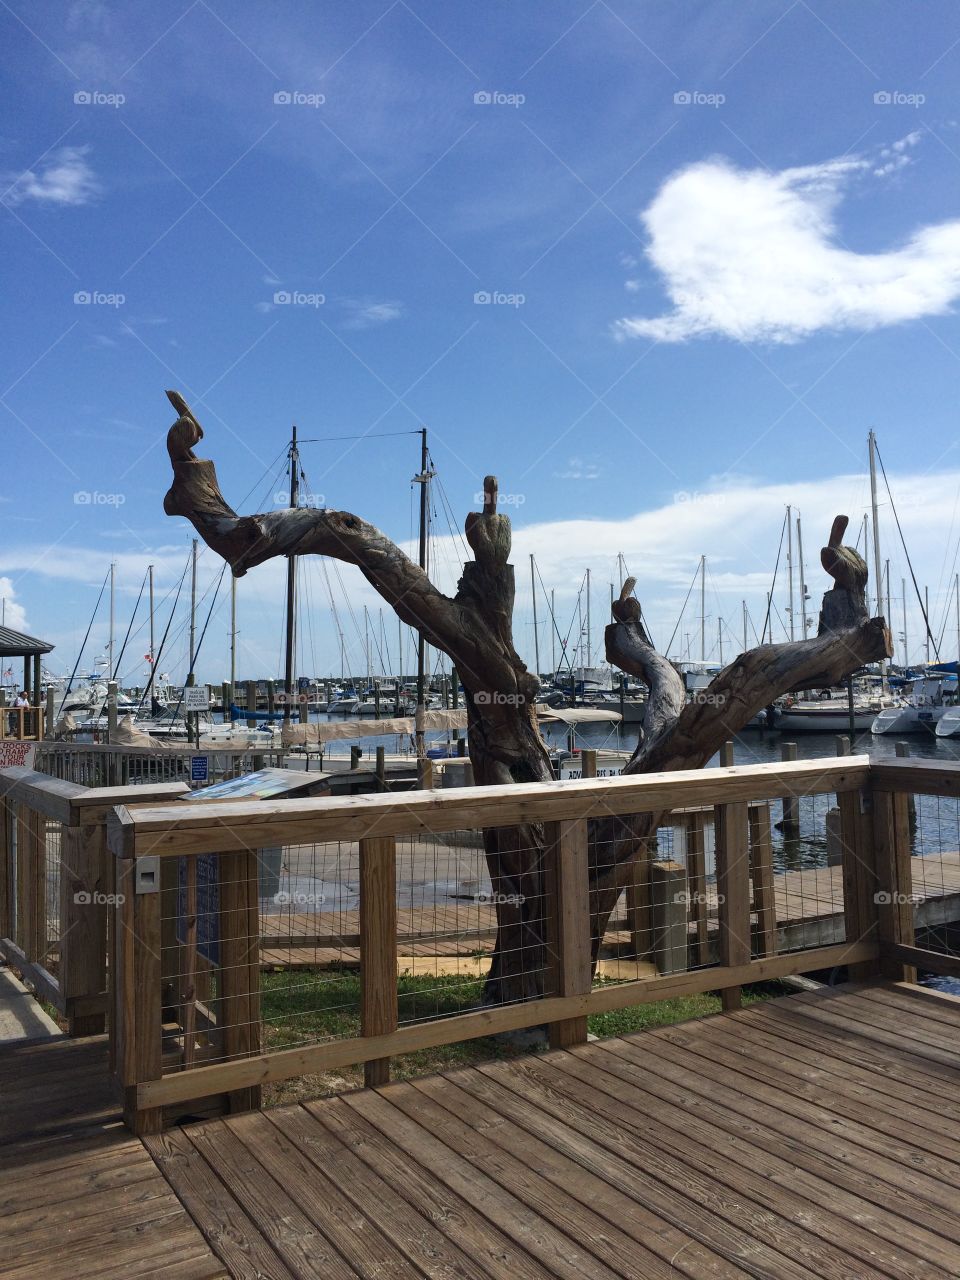 Tree sculpture in Panama City Florida on pier. 